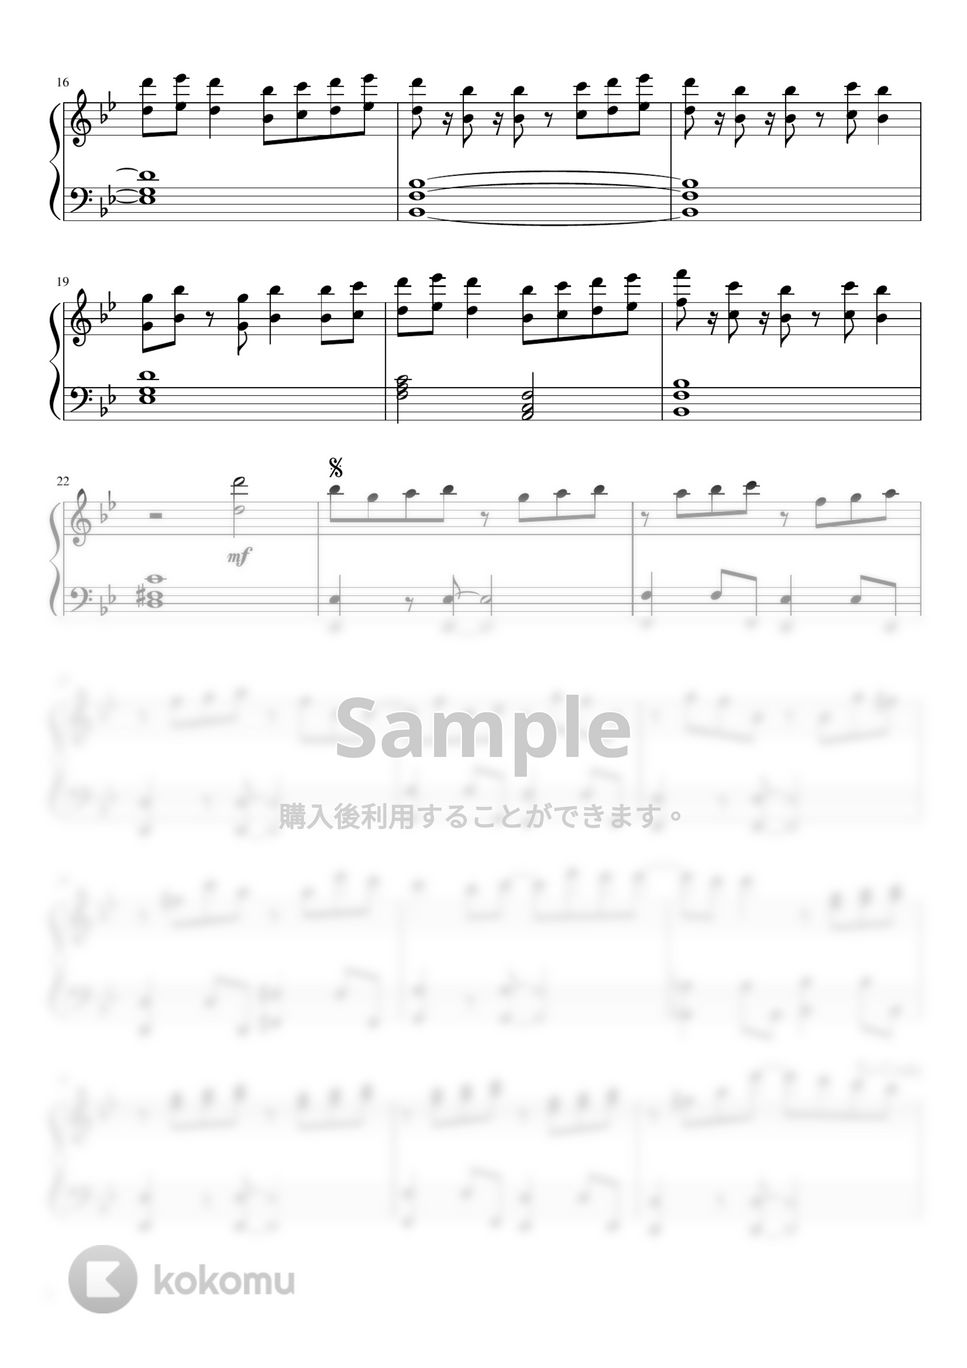 YOASOBI - 群青 by pianon